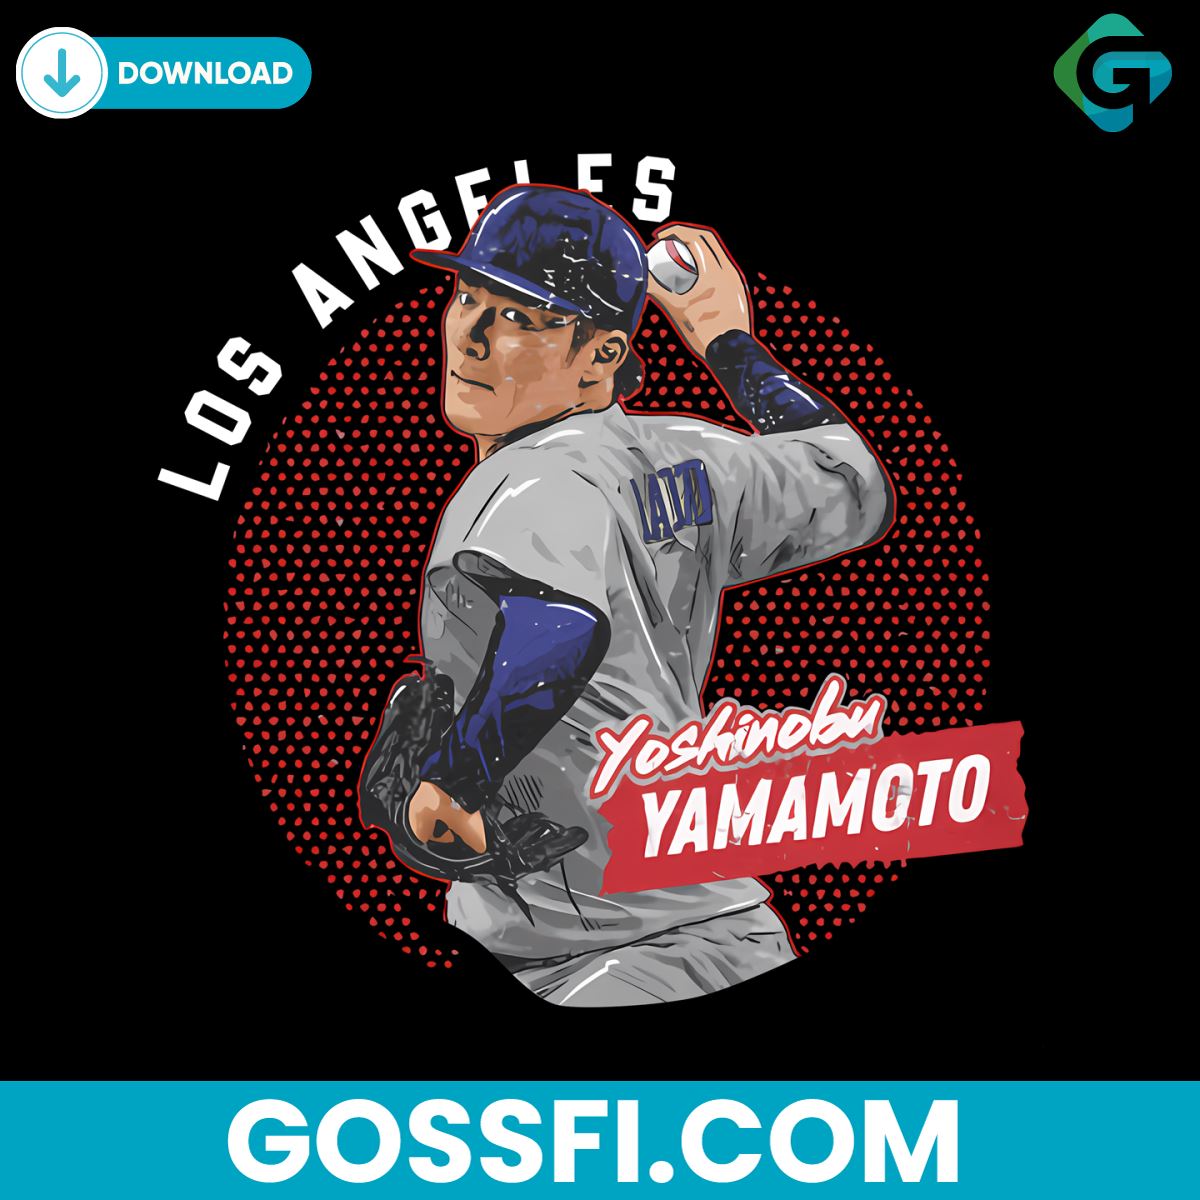 yoshinobu-yamamoto-los-angeles-dodgers-player-png